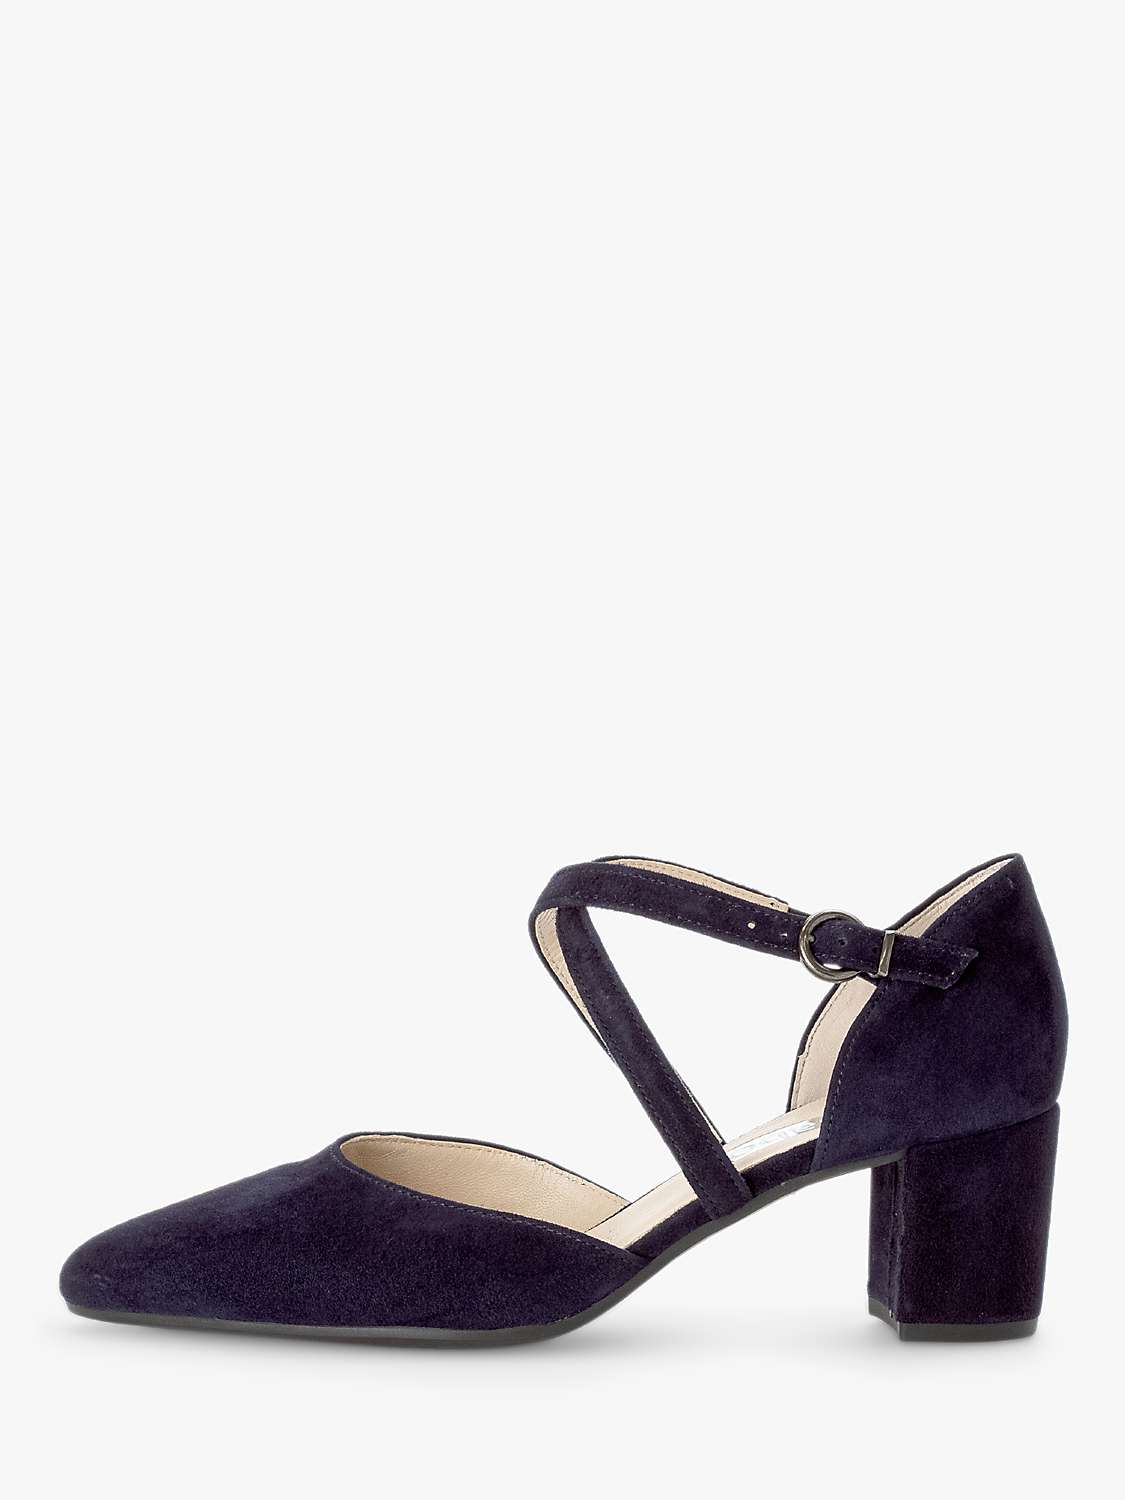 Buy Gabor Gisele Suede Cross Strap Court Shoes, Atlantic Online at johnlewis.com